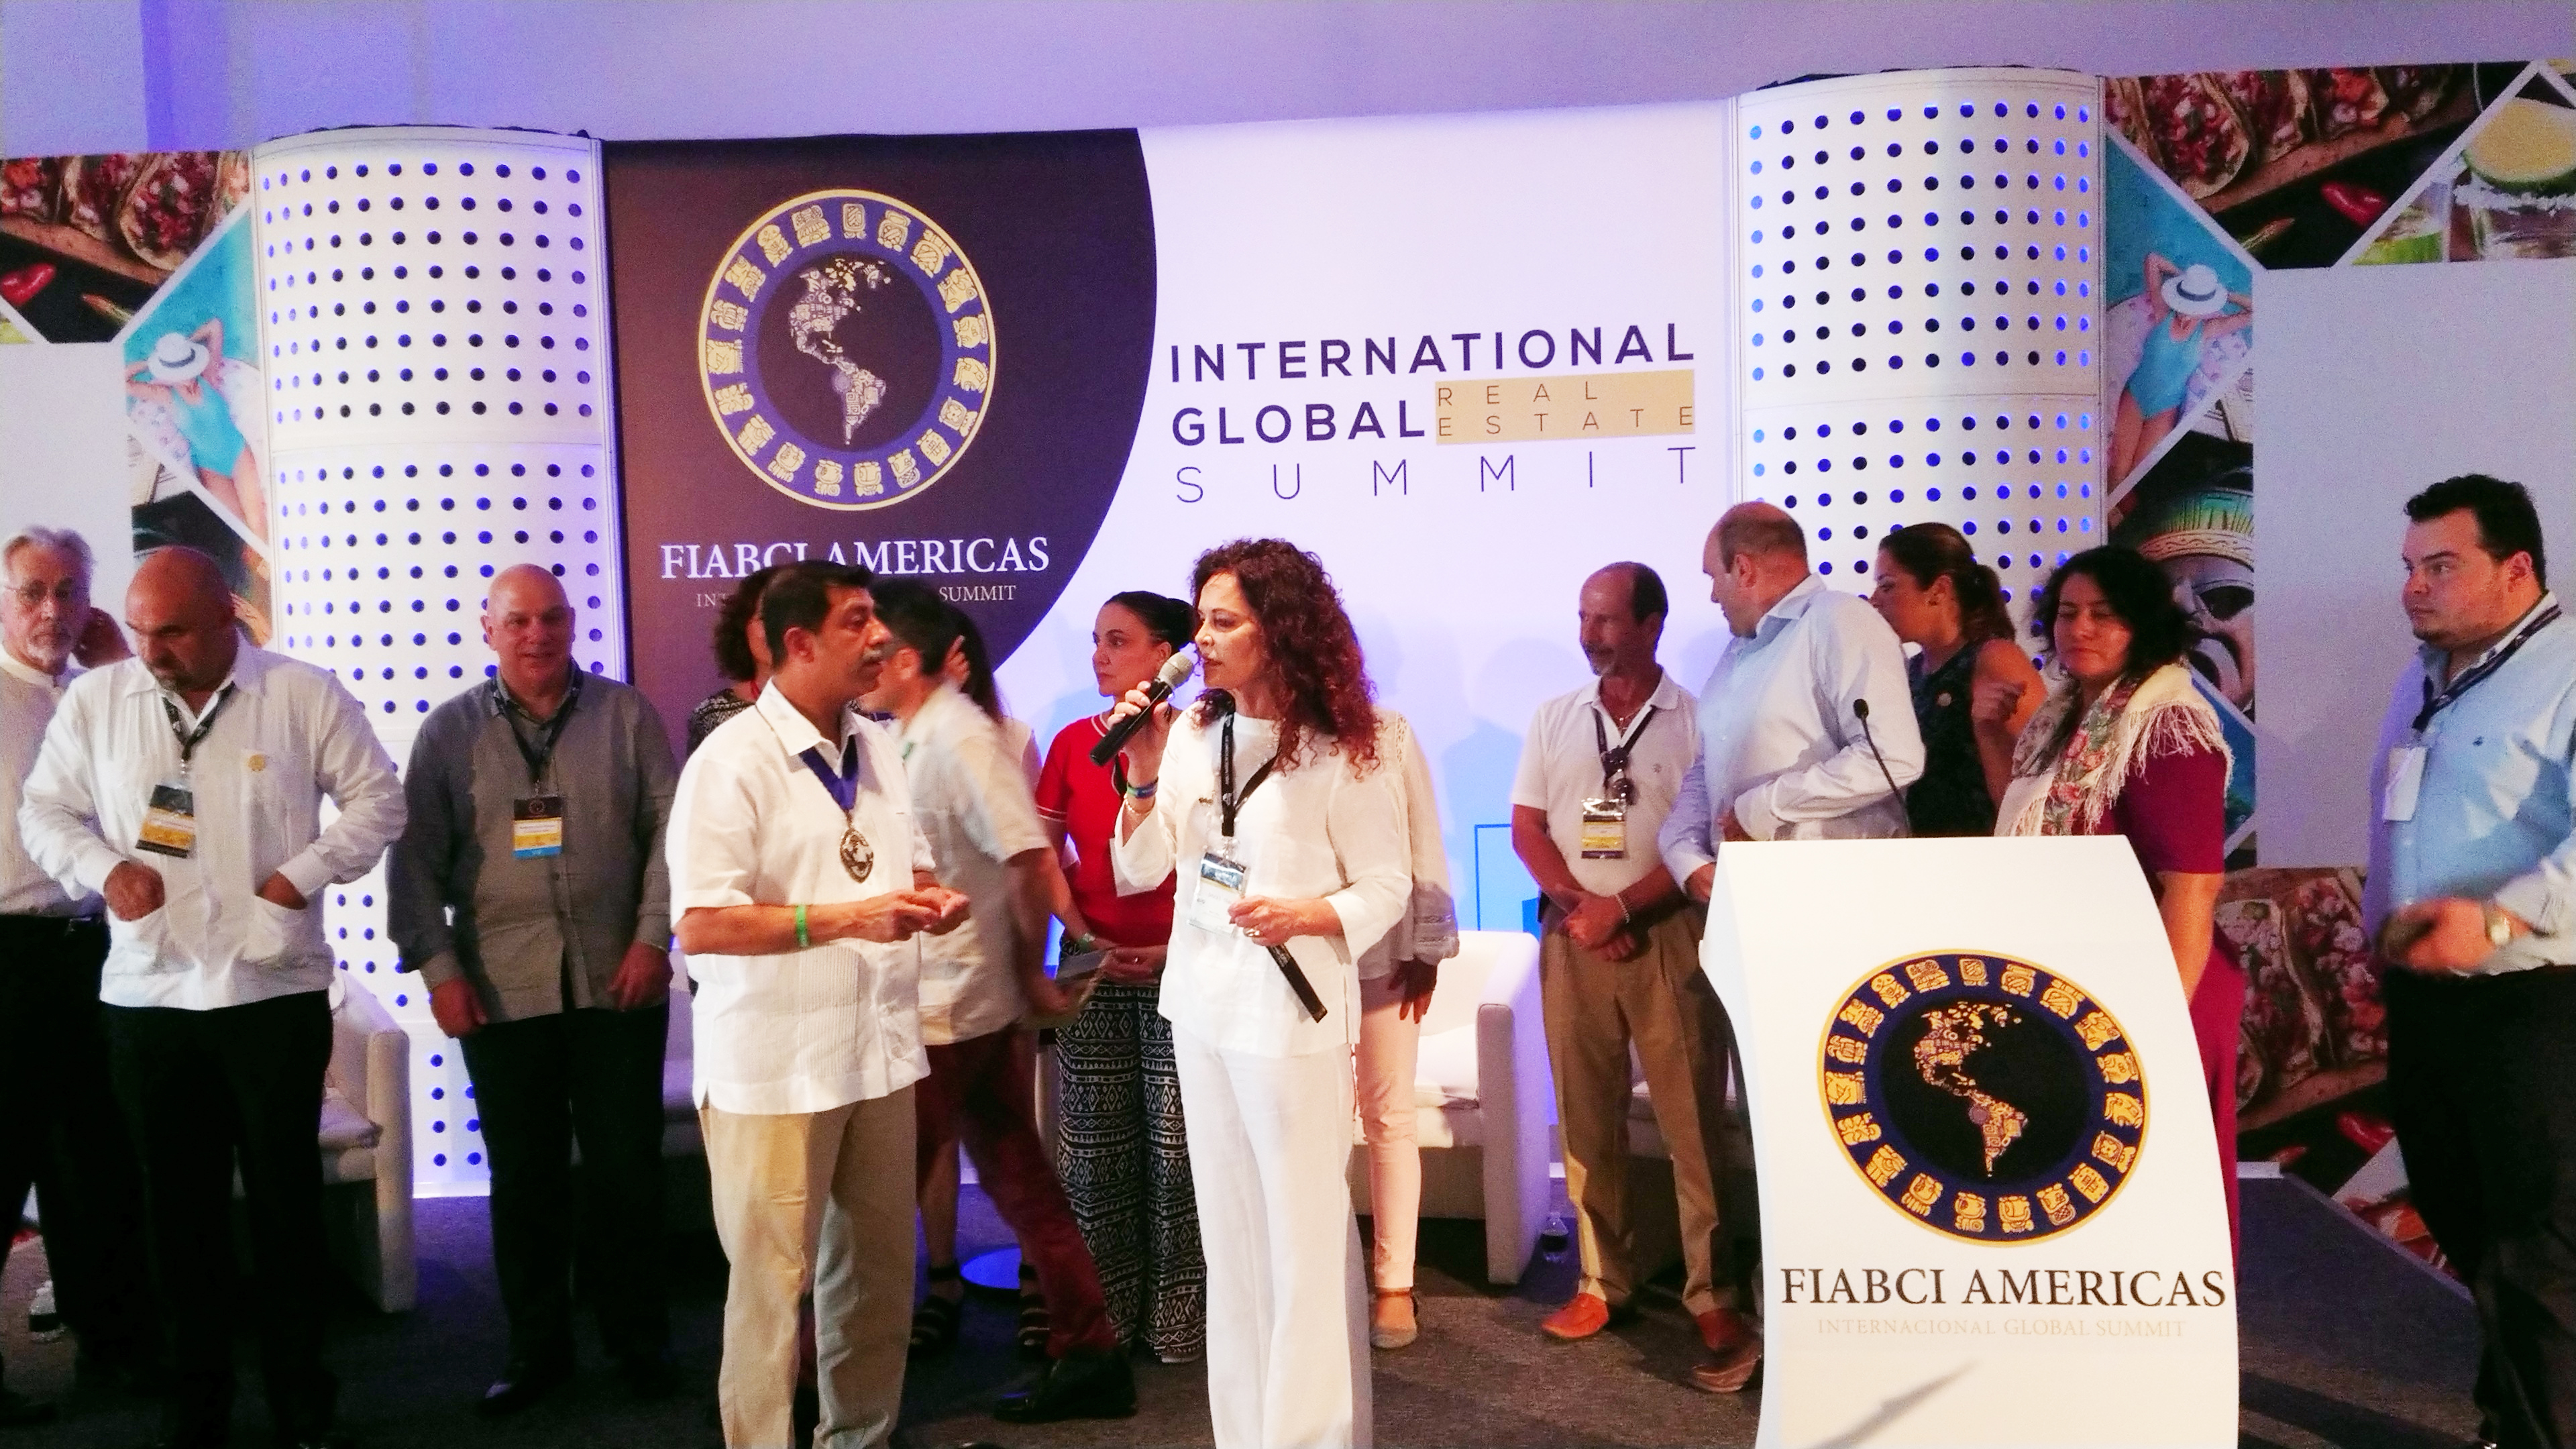 Local Brokers Attend FIABCI Americas International Global Summit